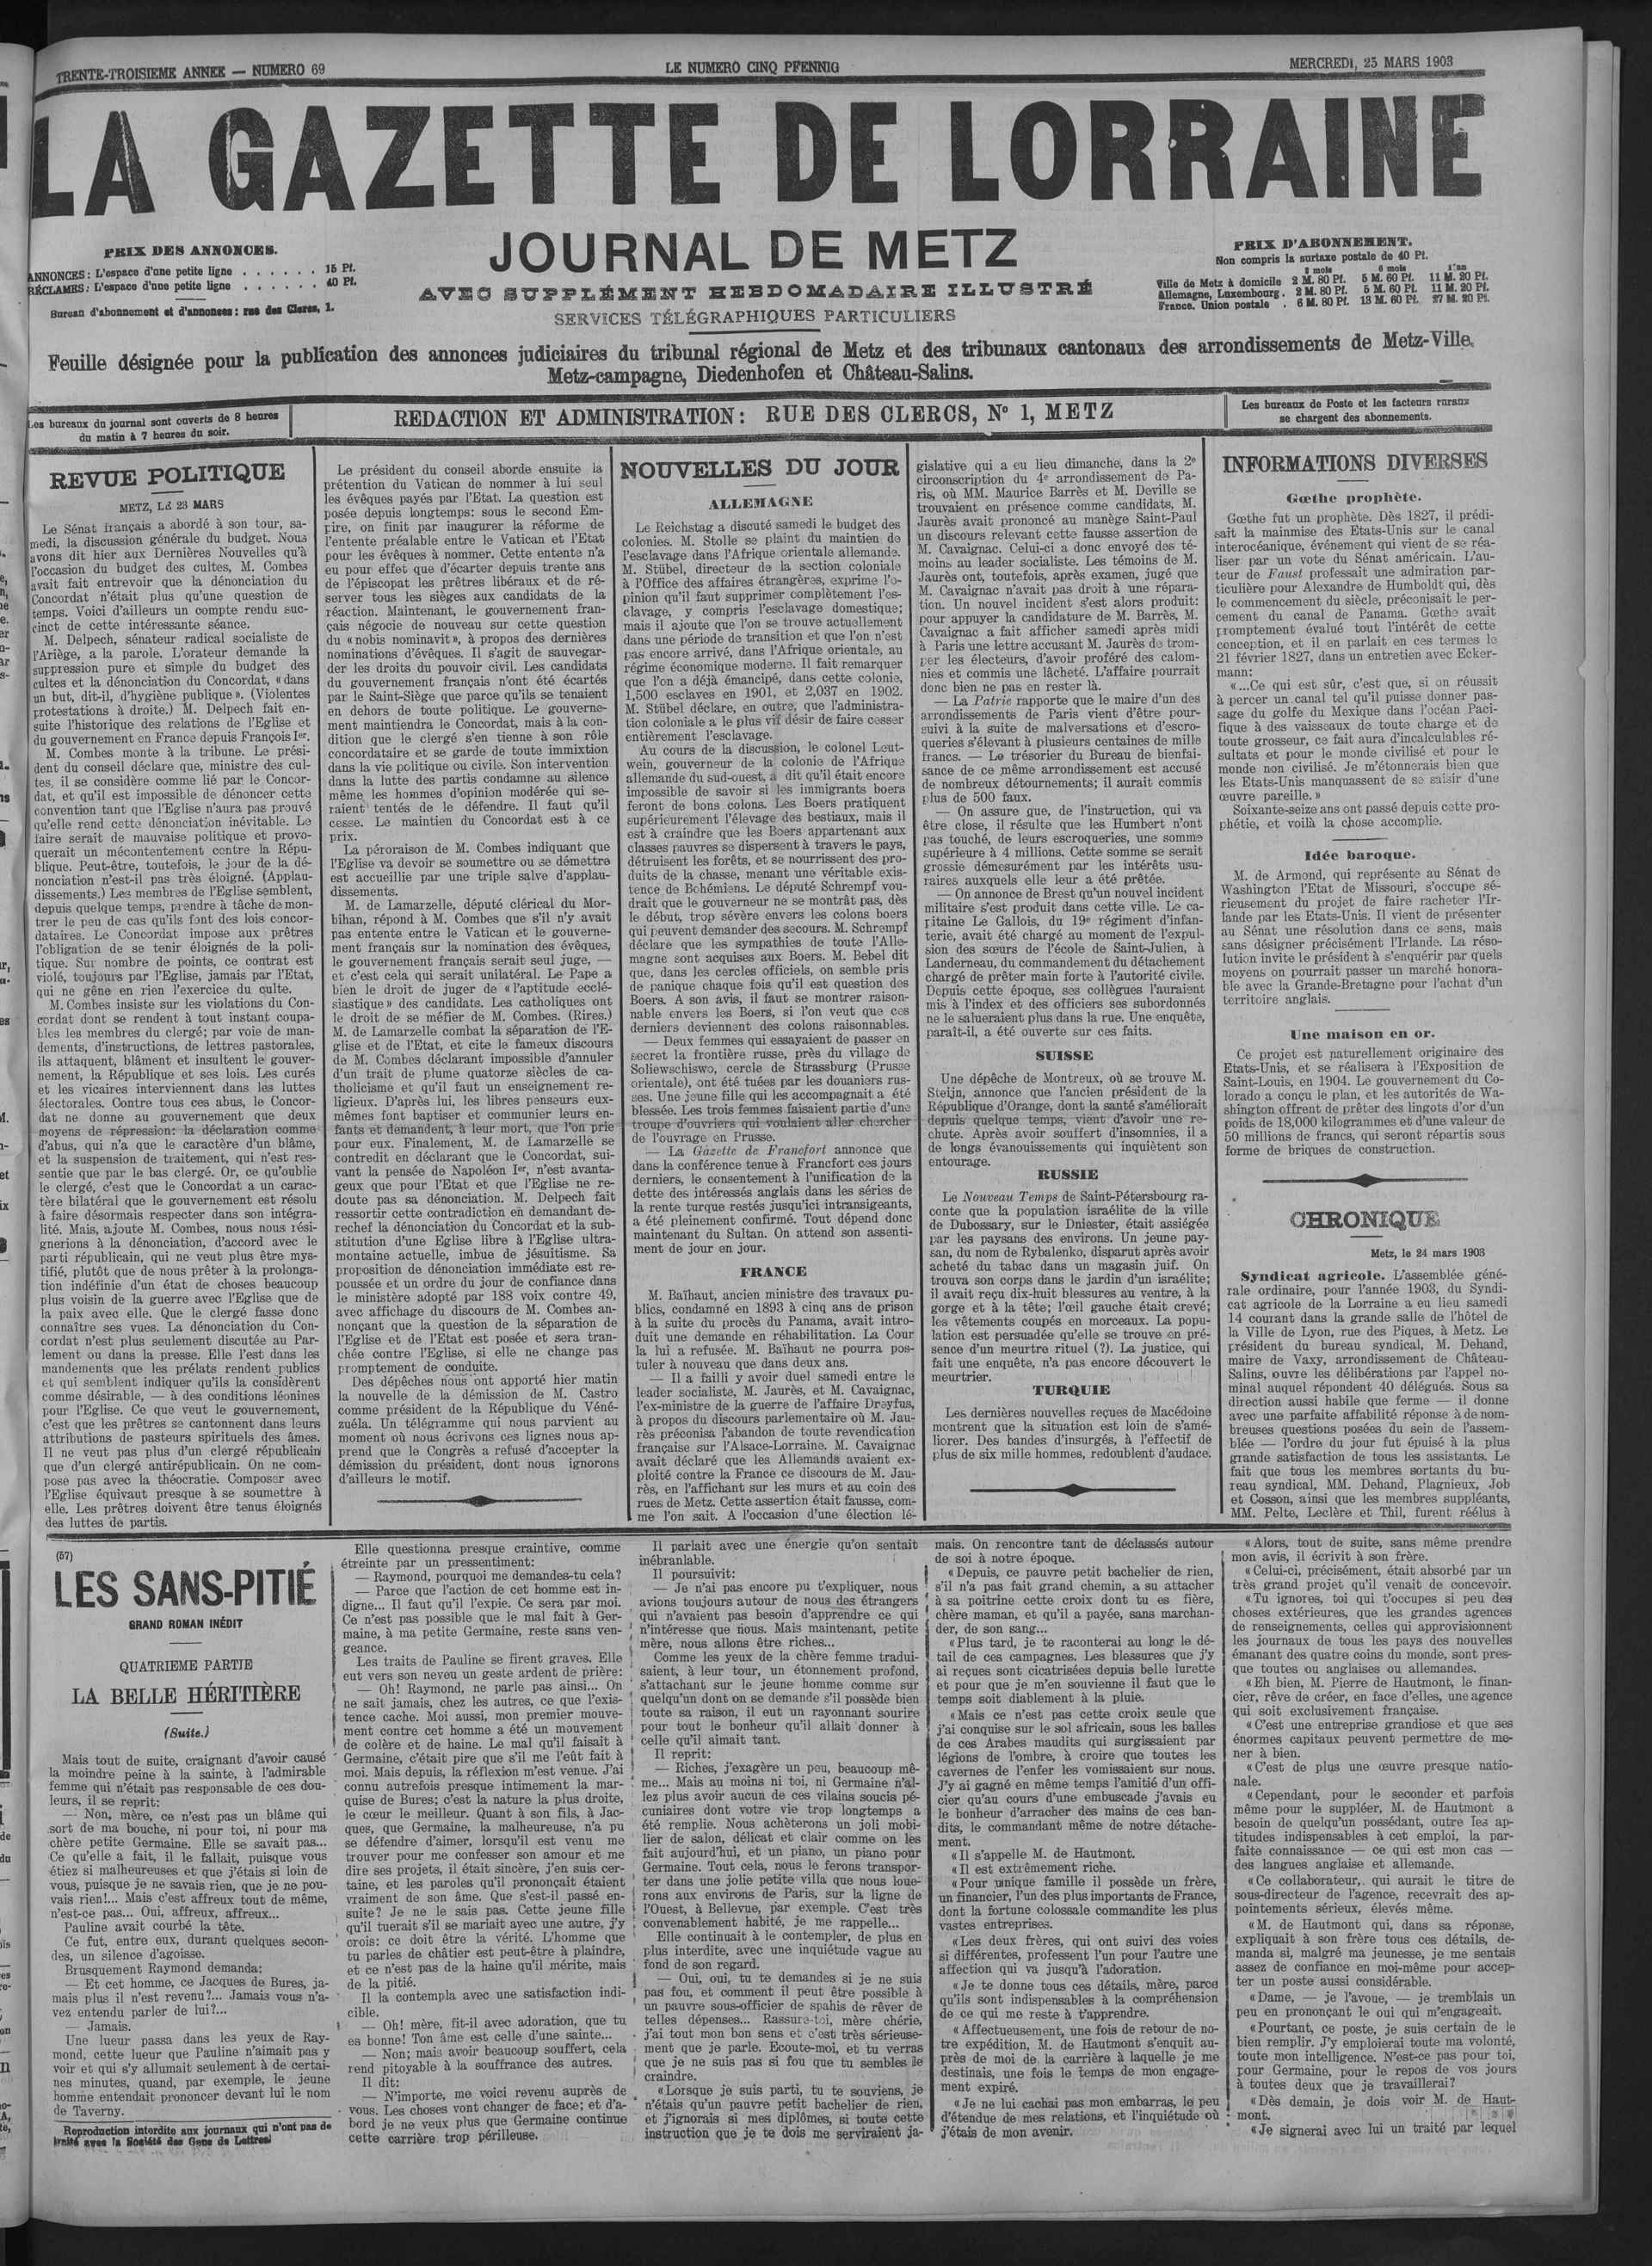 La Gazette de Lorraine